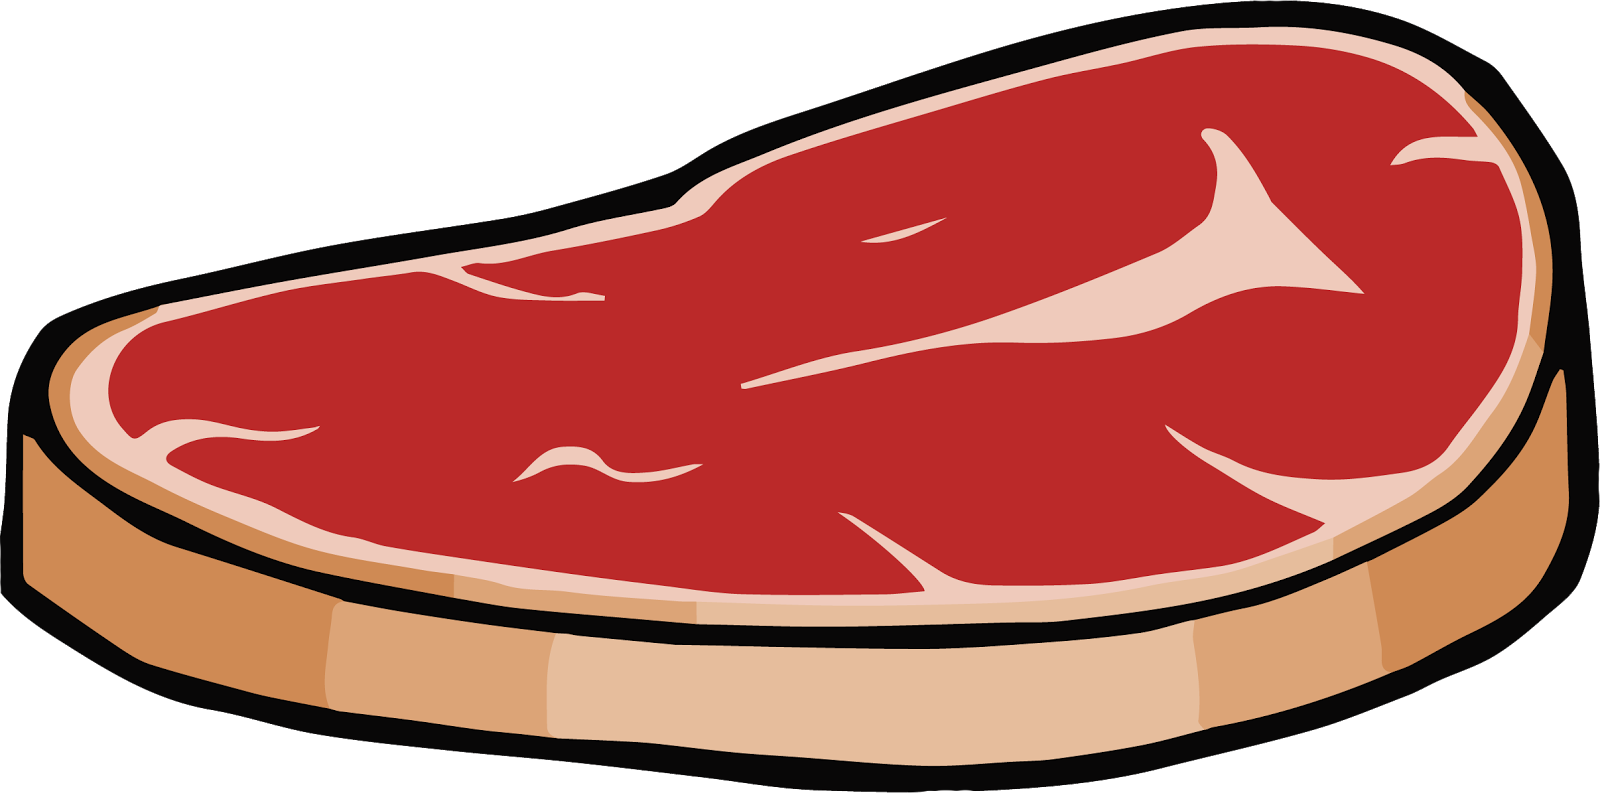 Grilled Steak Clip Art Clipar